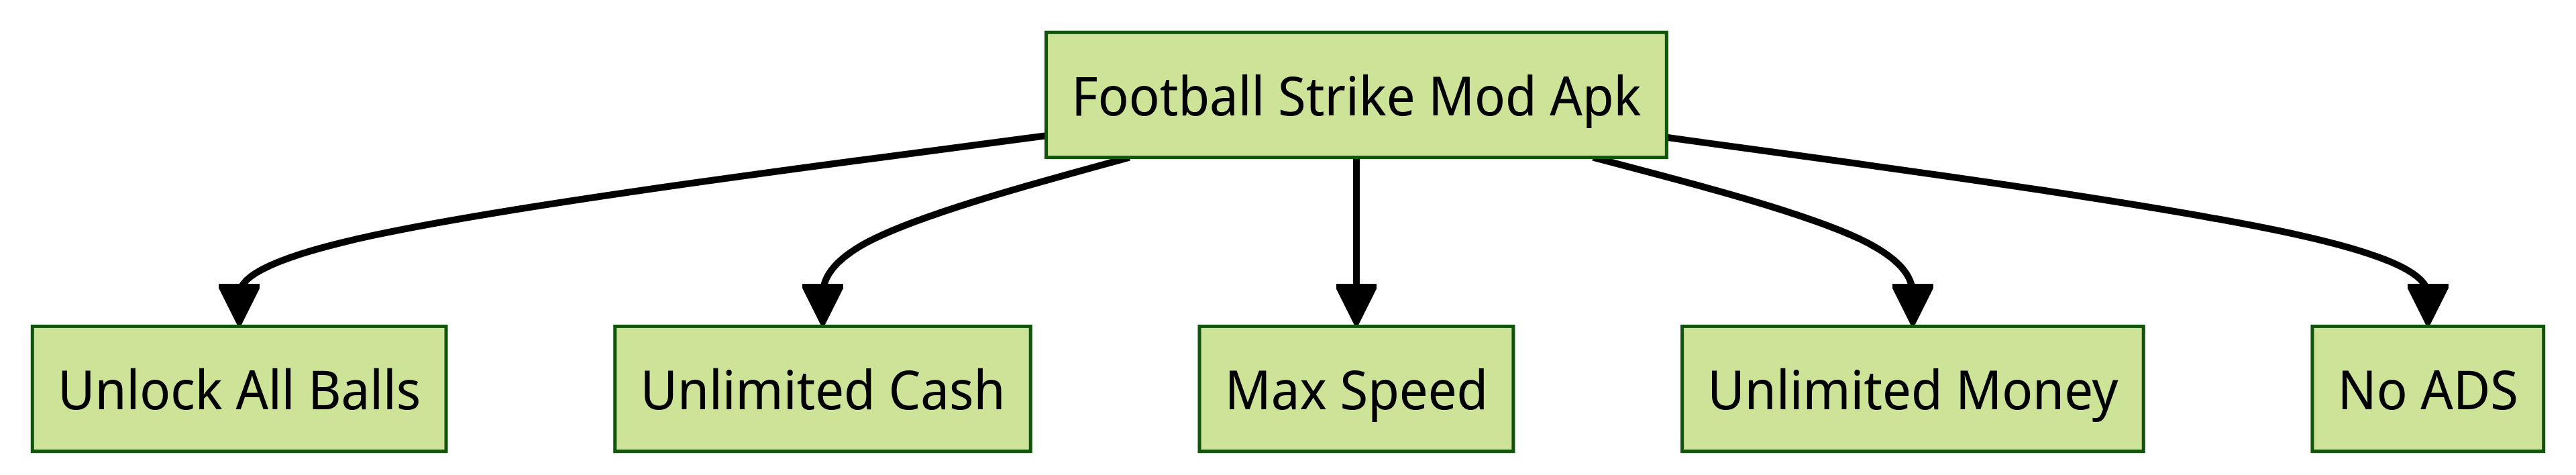 Mod Features Football Strike Mod Apk